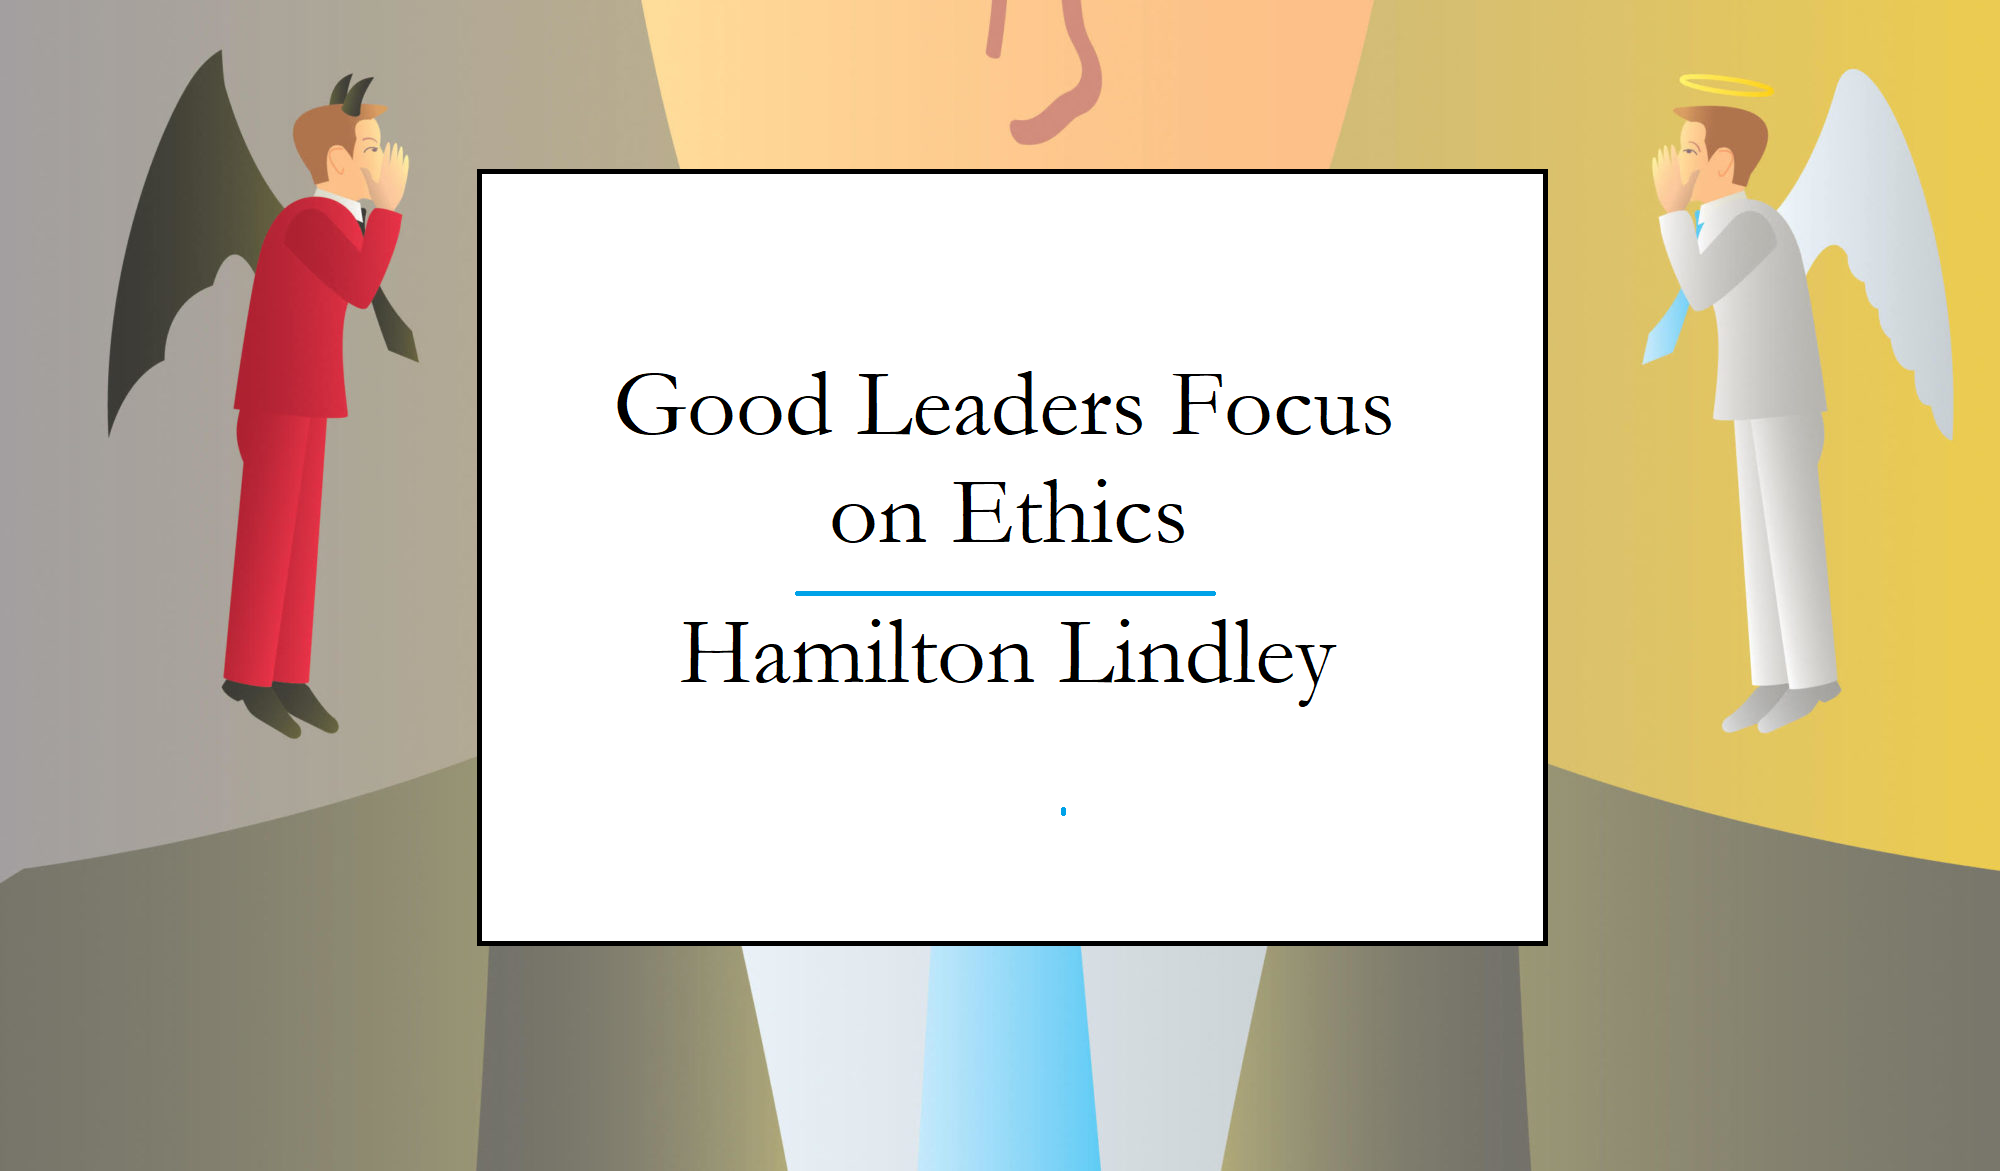 Hamilton Lindley Focus on Ethics